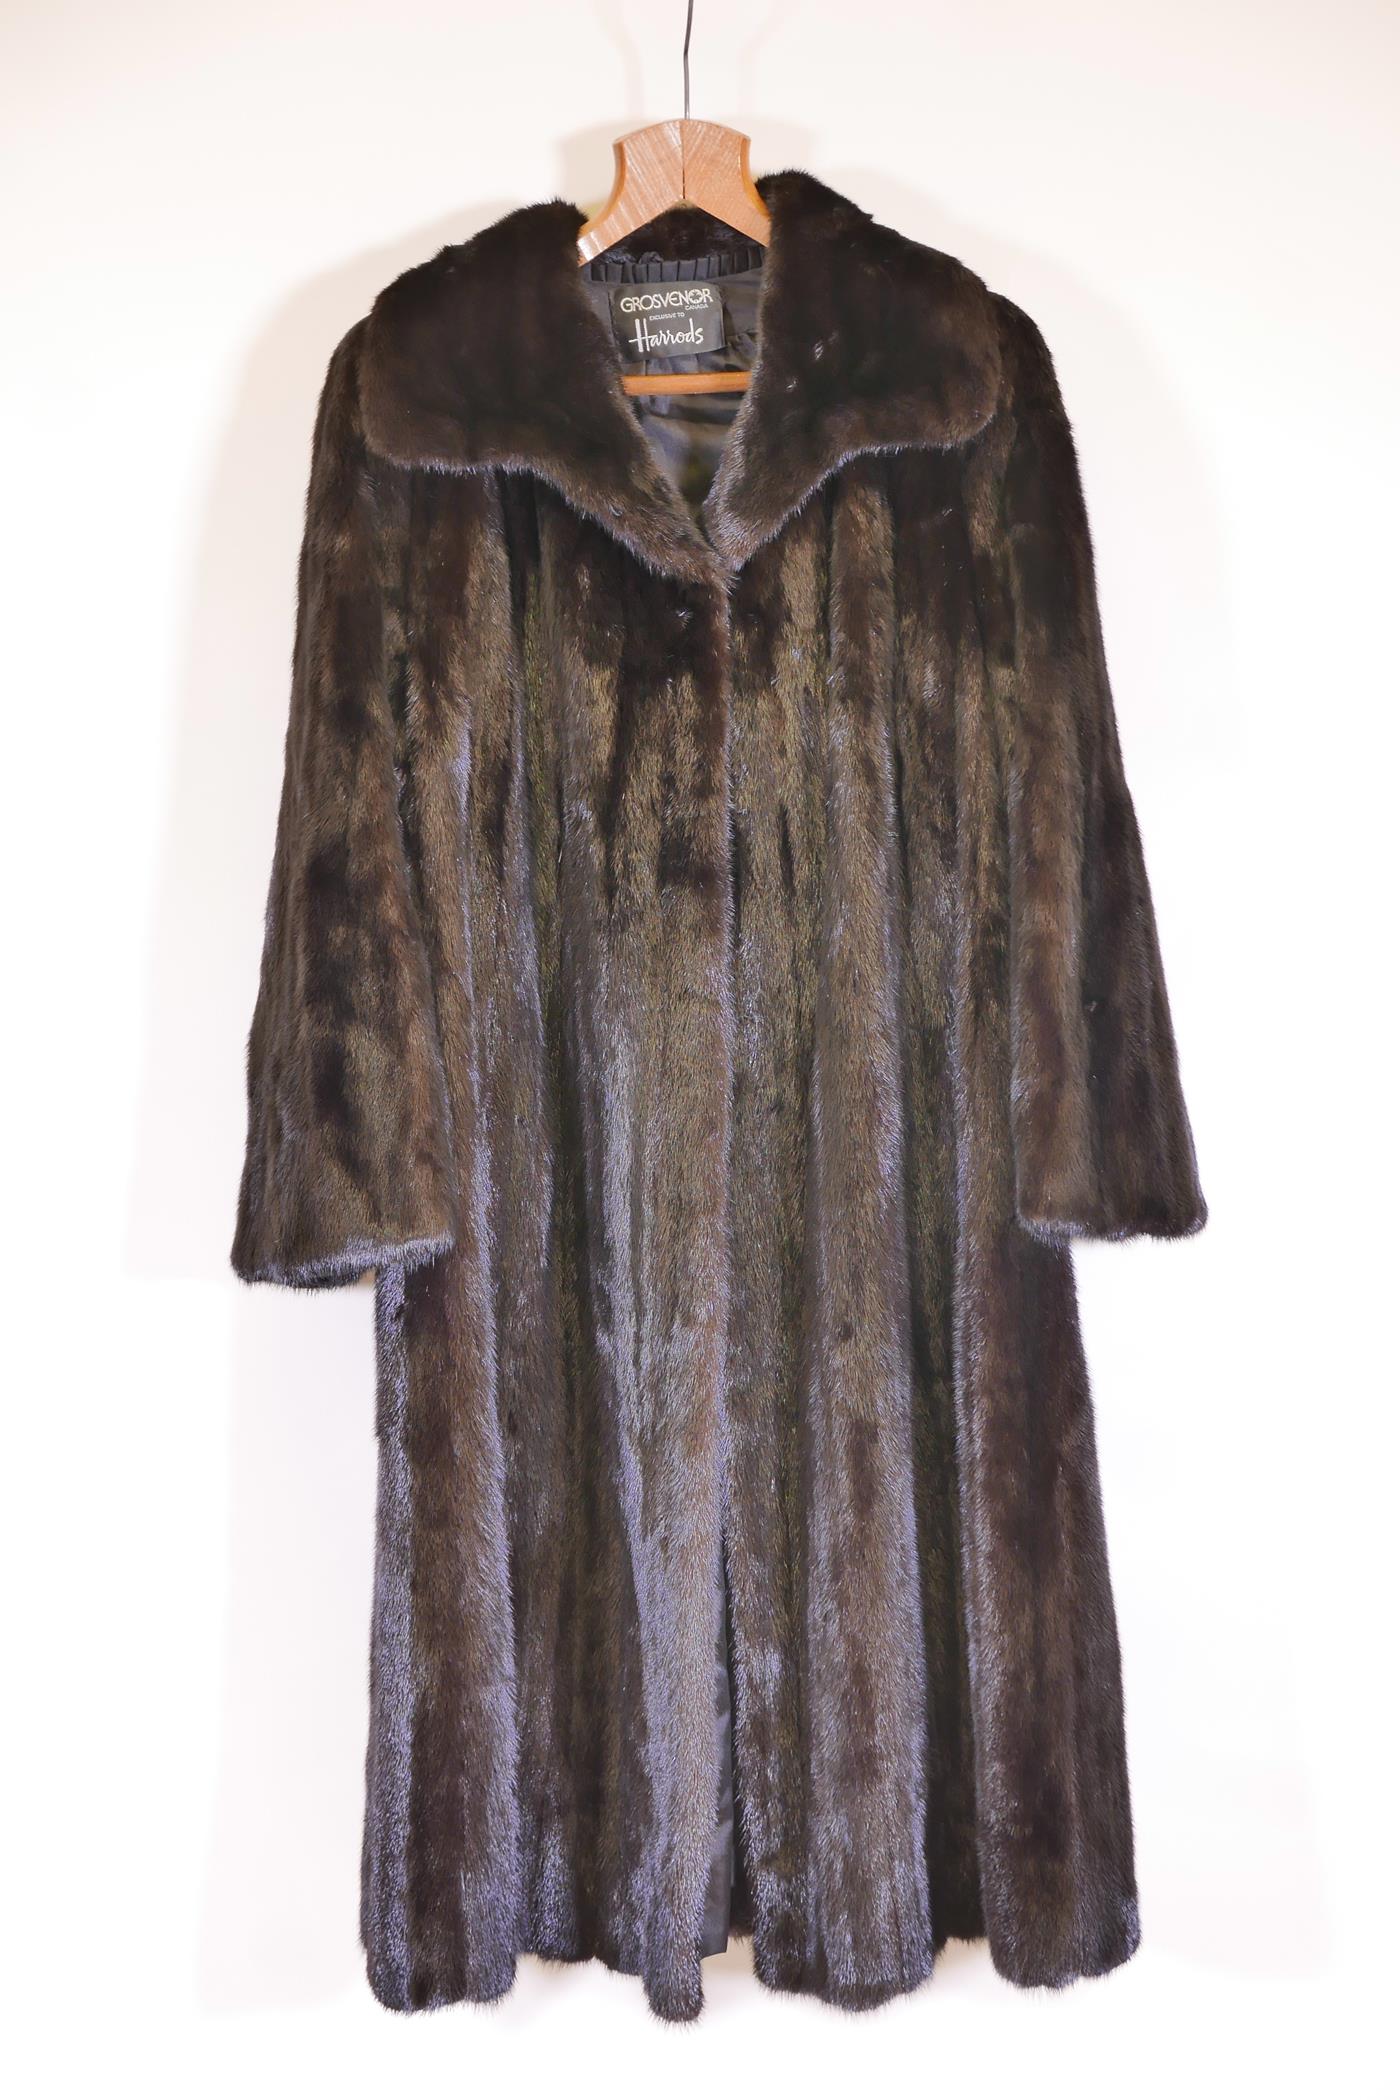 A vintage Harrods ladies' mink fur coat by Grosvenor of Canada, in fine condition, 48" long